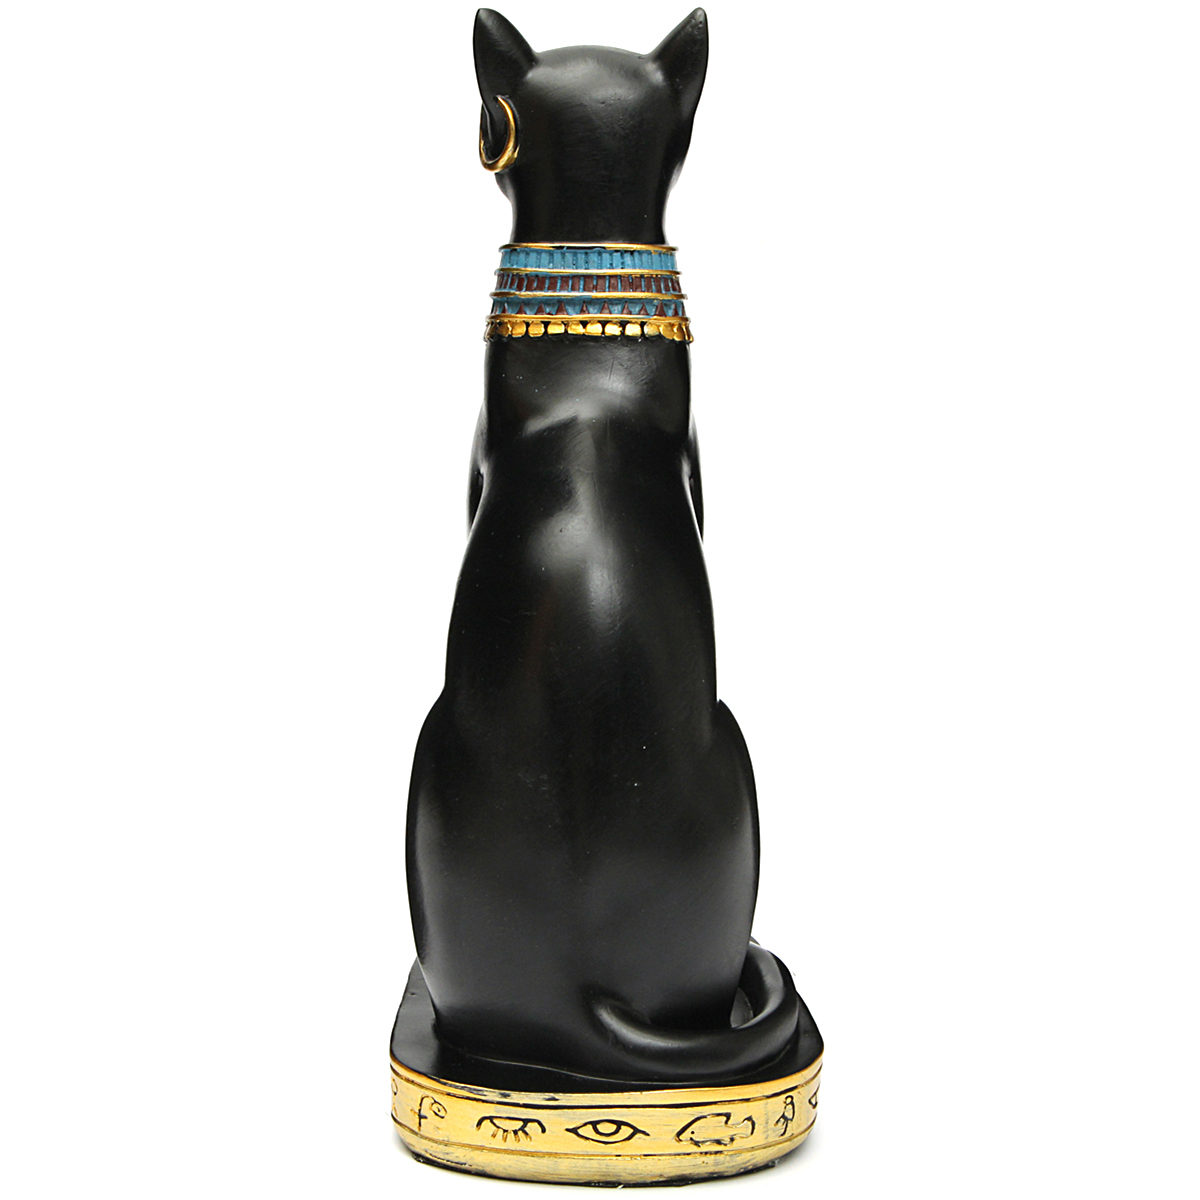 96inch-Resin-Vintage-Egyptian-Bastet-Goddess-Figurine-Black-Cat-Pharaoh-Statue-Epoxy-1304890-6